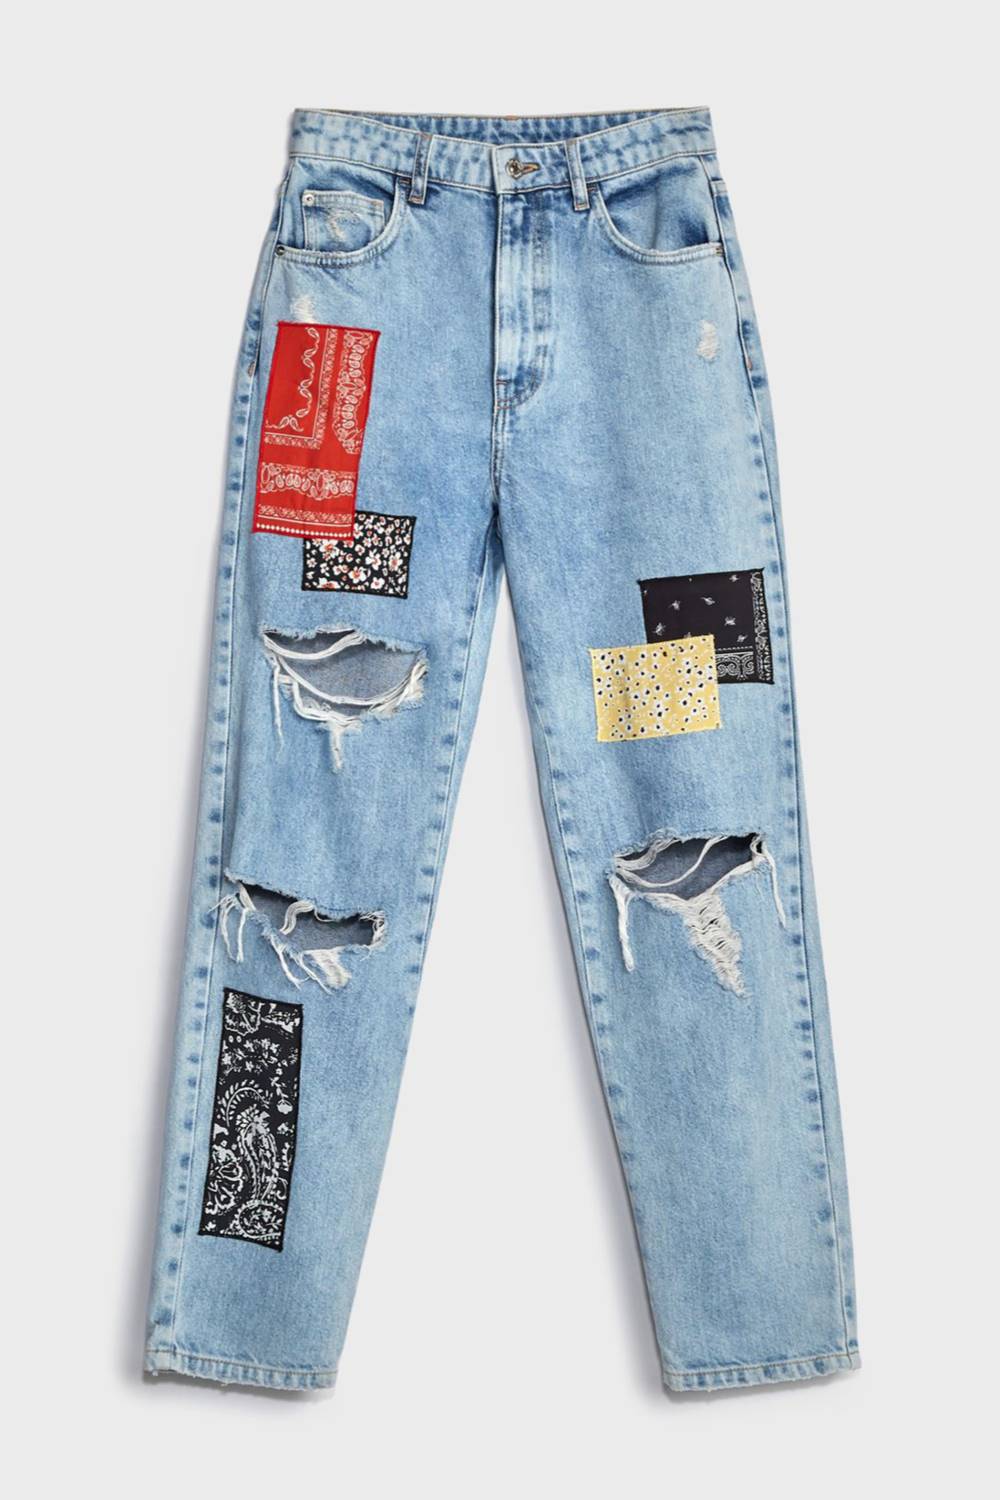 Compras fashion insiders jeans noventas